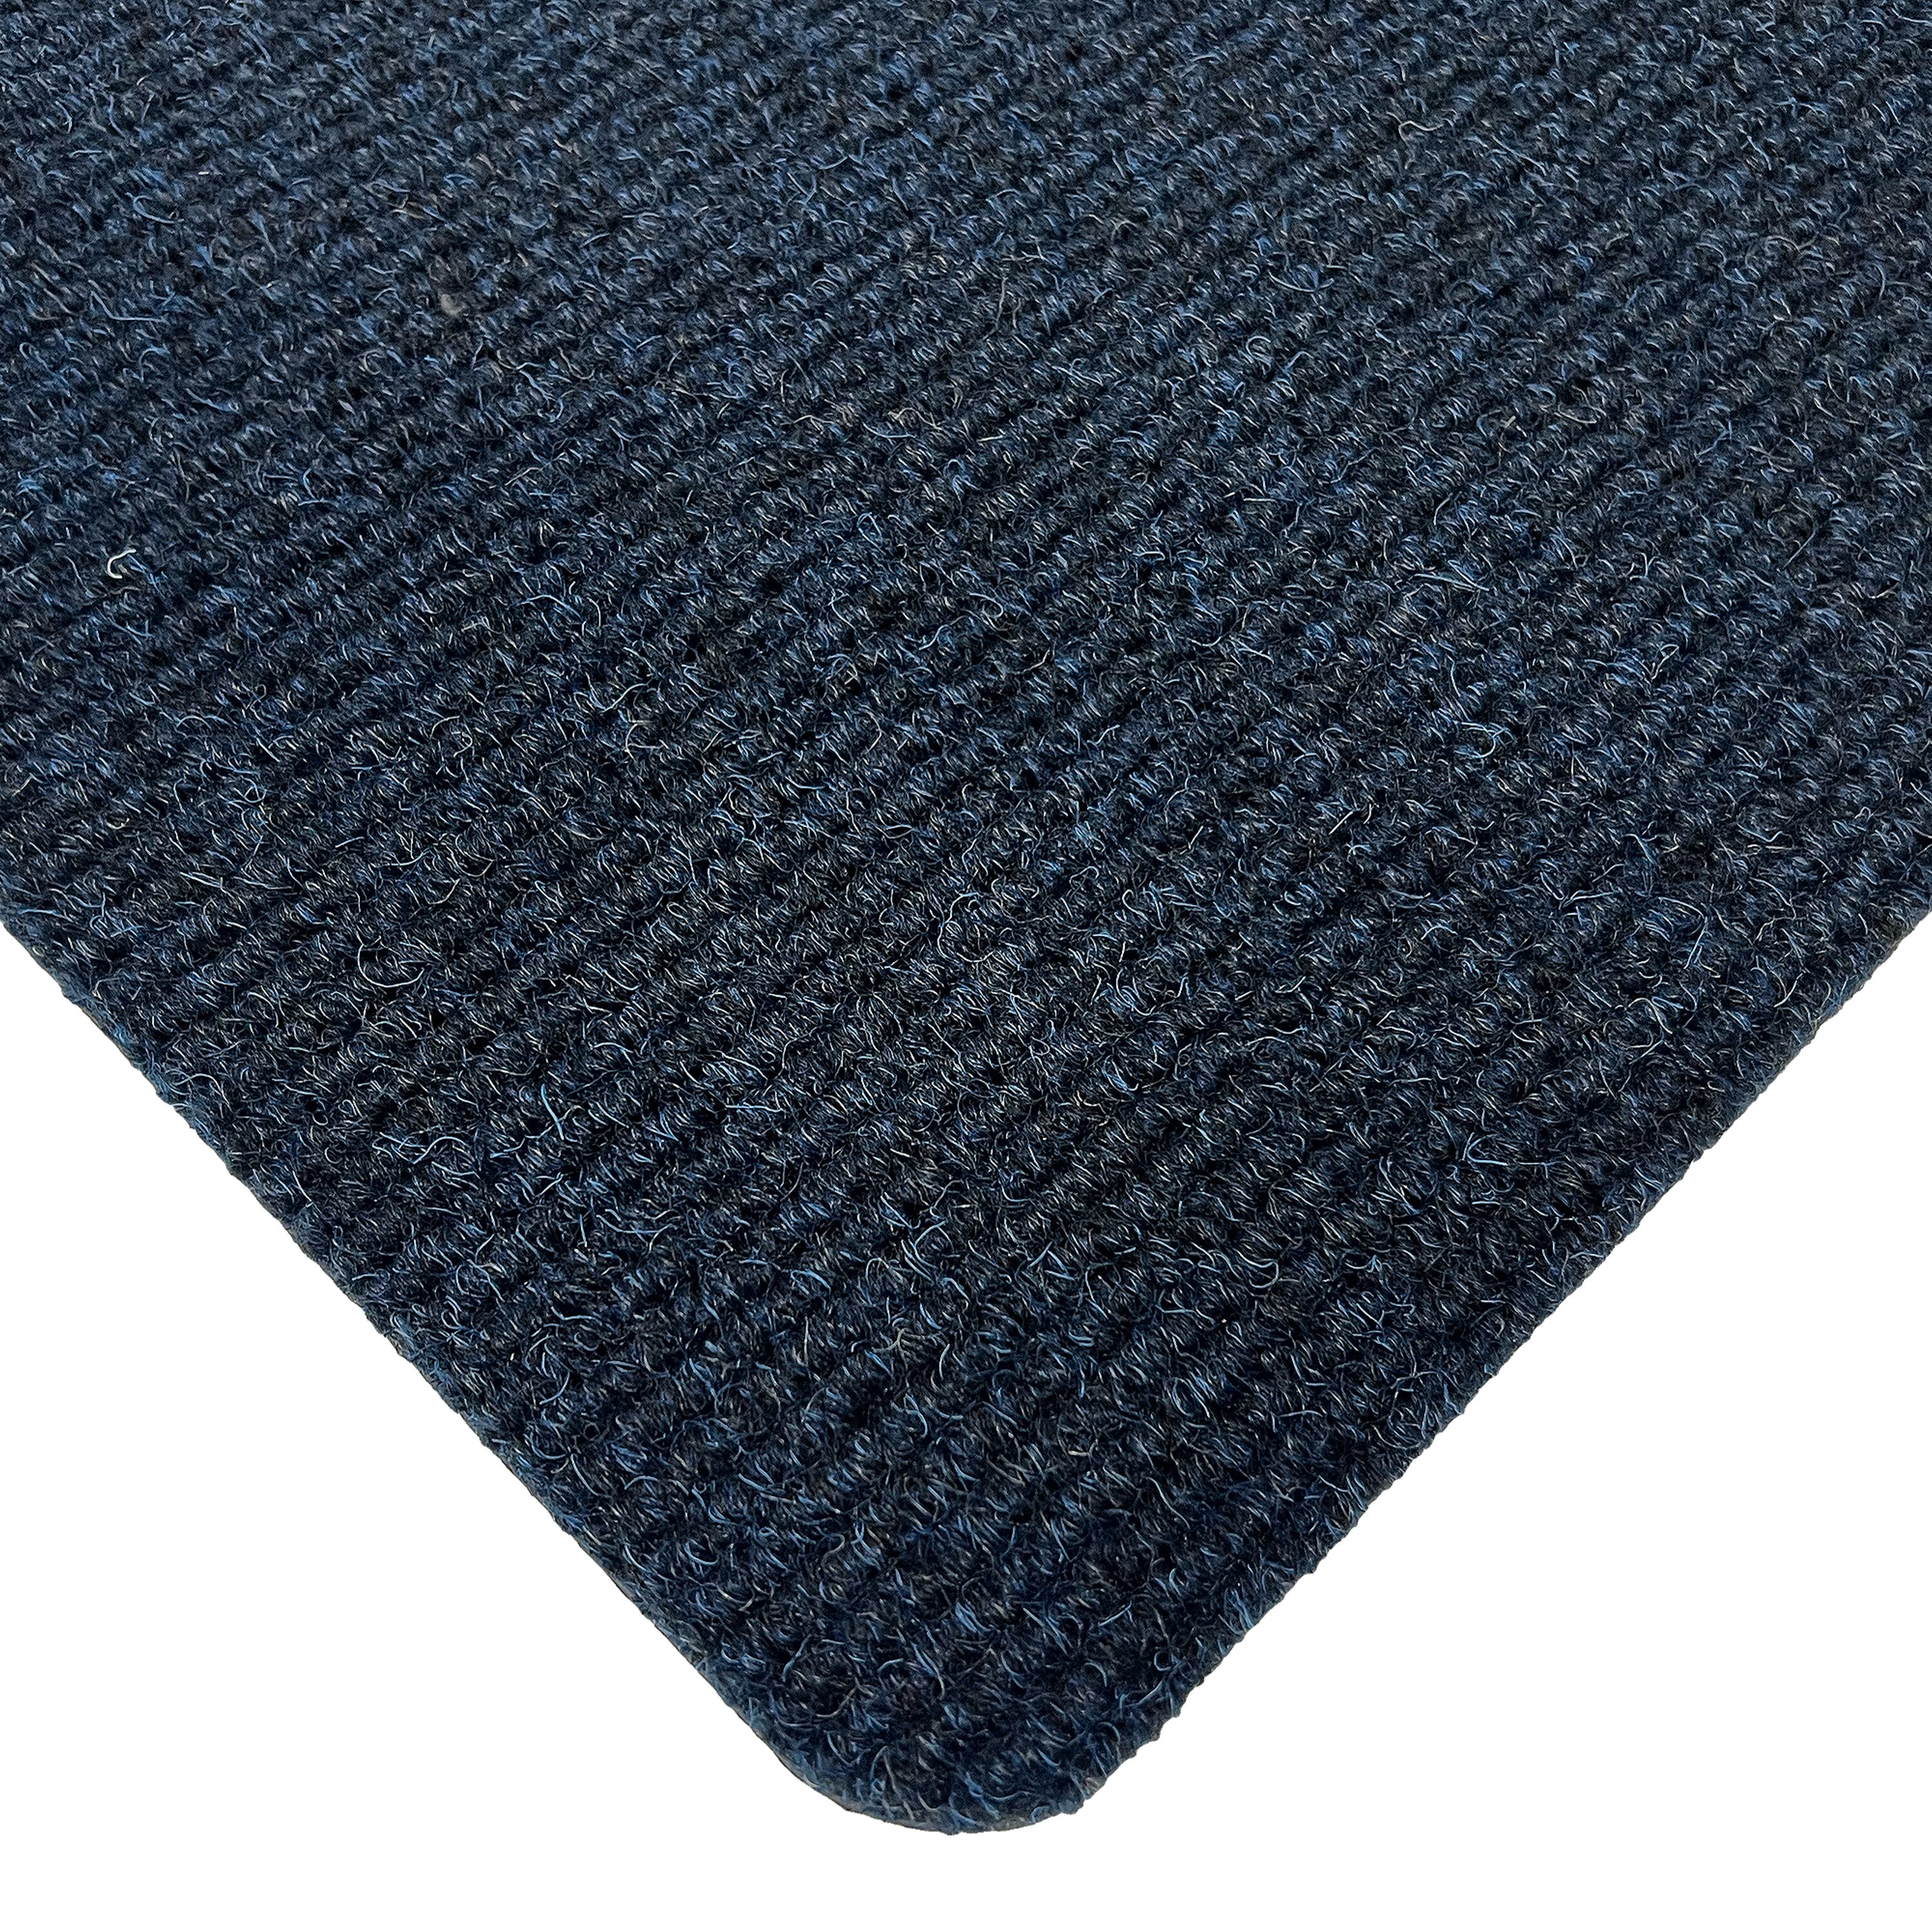 Modrá vstupní rohož FLOMA Mega Rib - délka 40 cm, šířka 60 cm, výška 1,3 cm